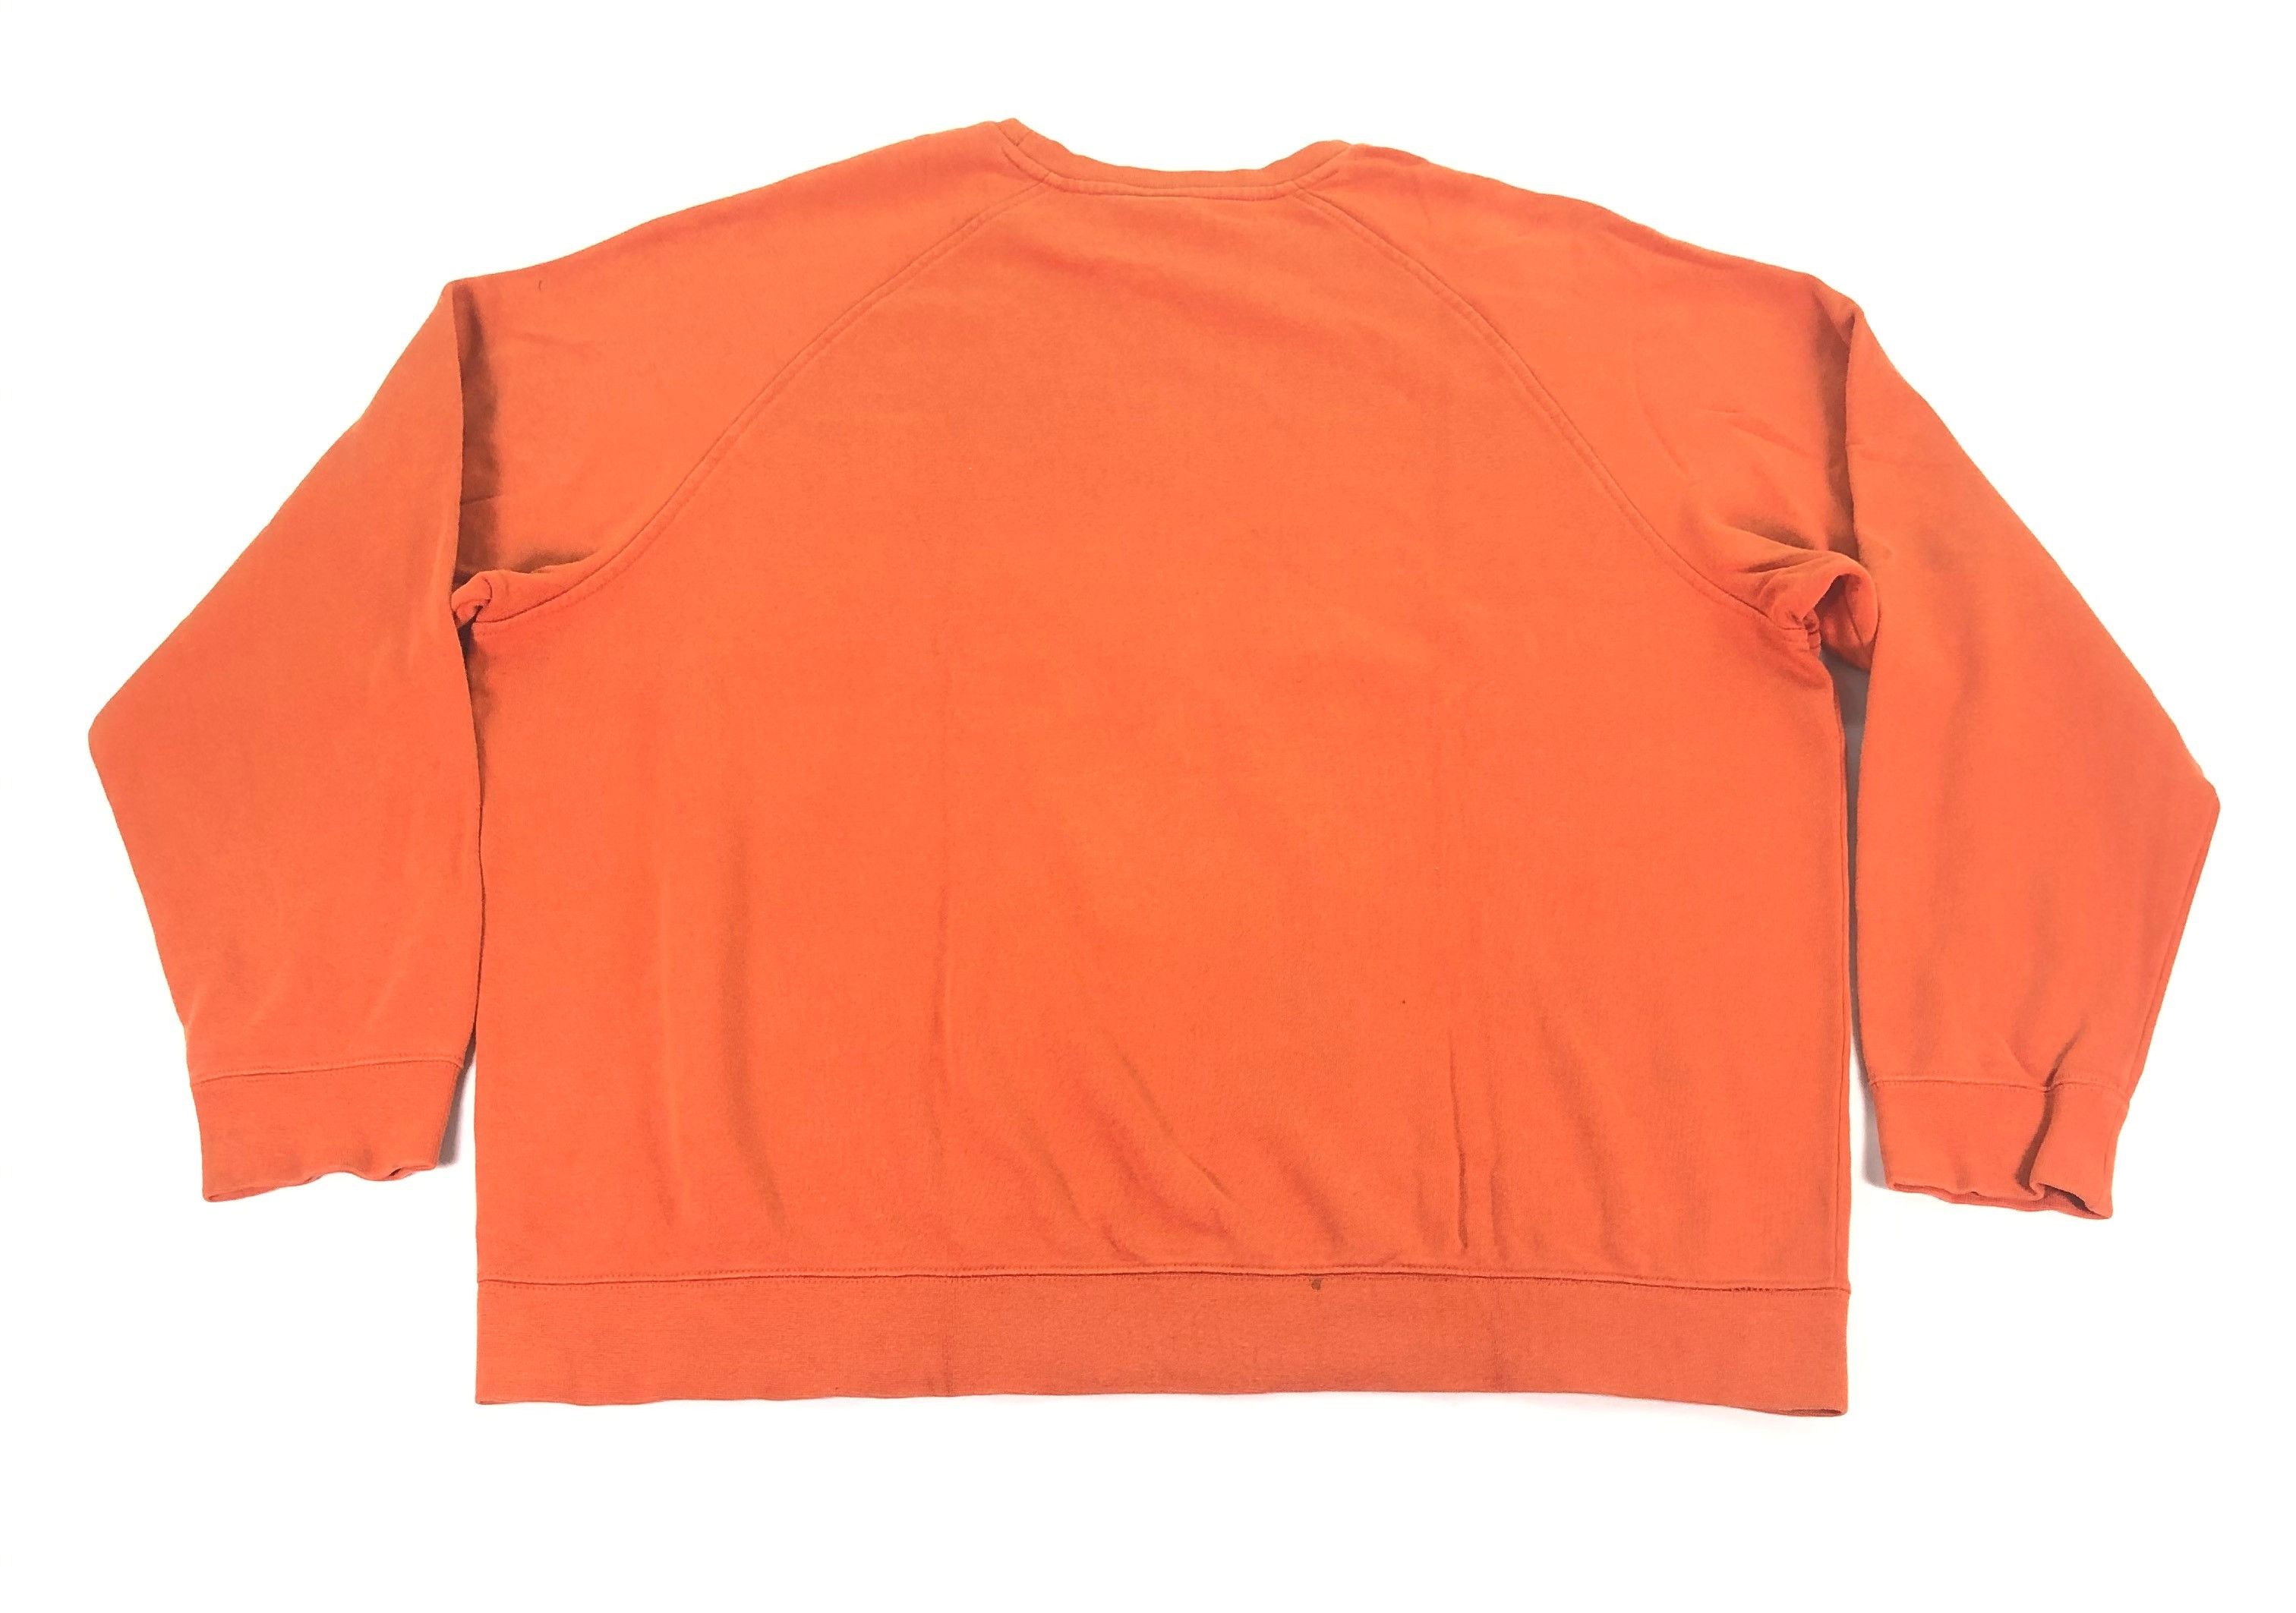 Nike Nike Sweatshirt Logo Pull Over Orange Colour Size US XXL / EU 58 / 5 - 7 Preview